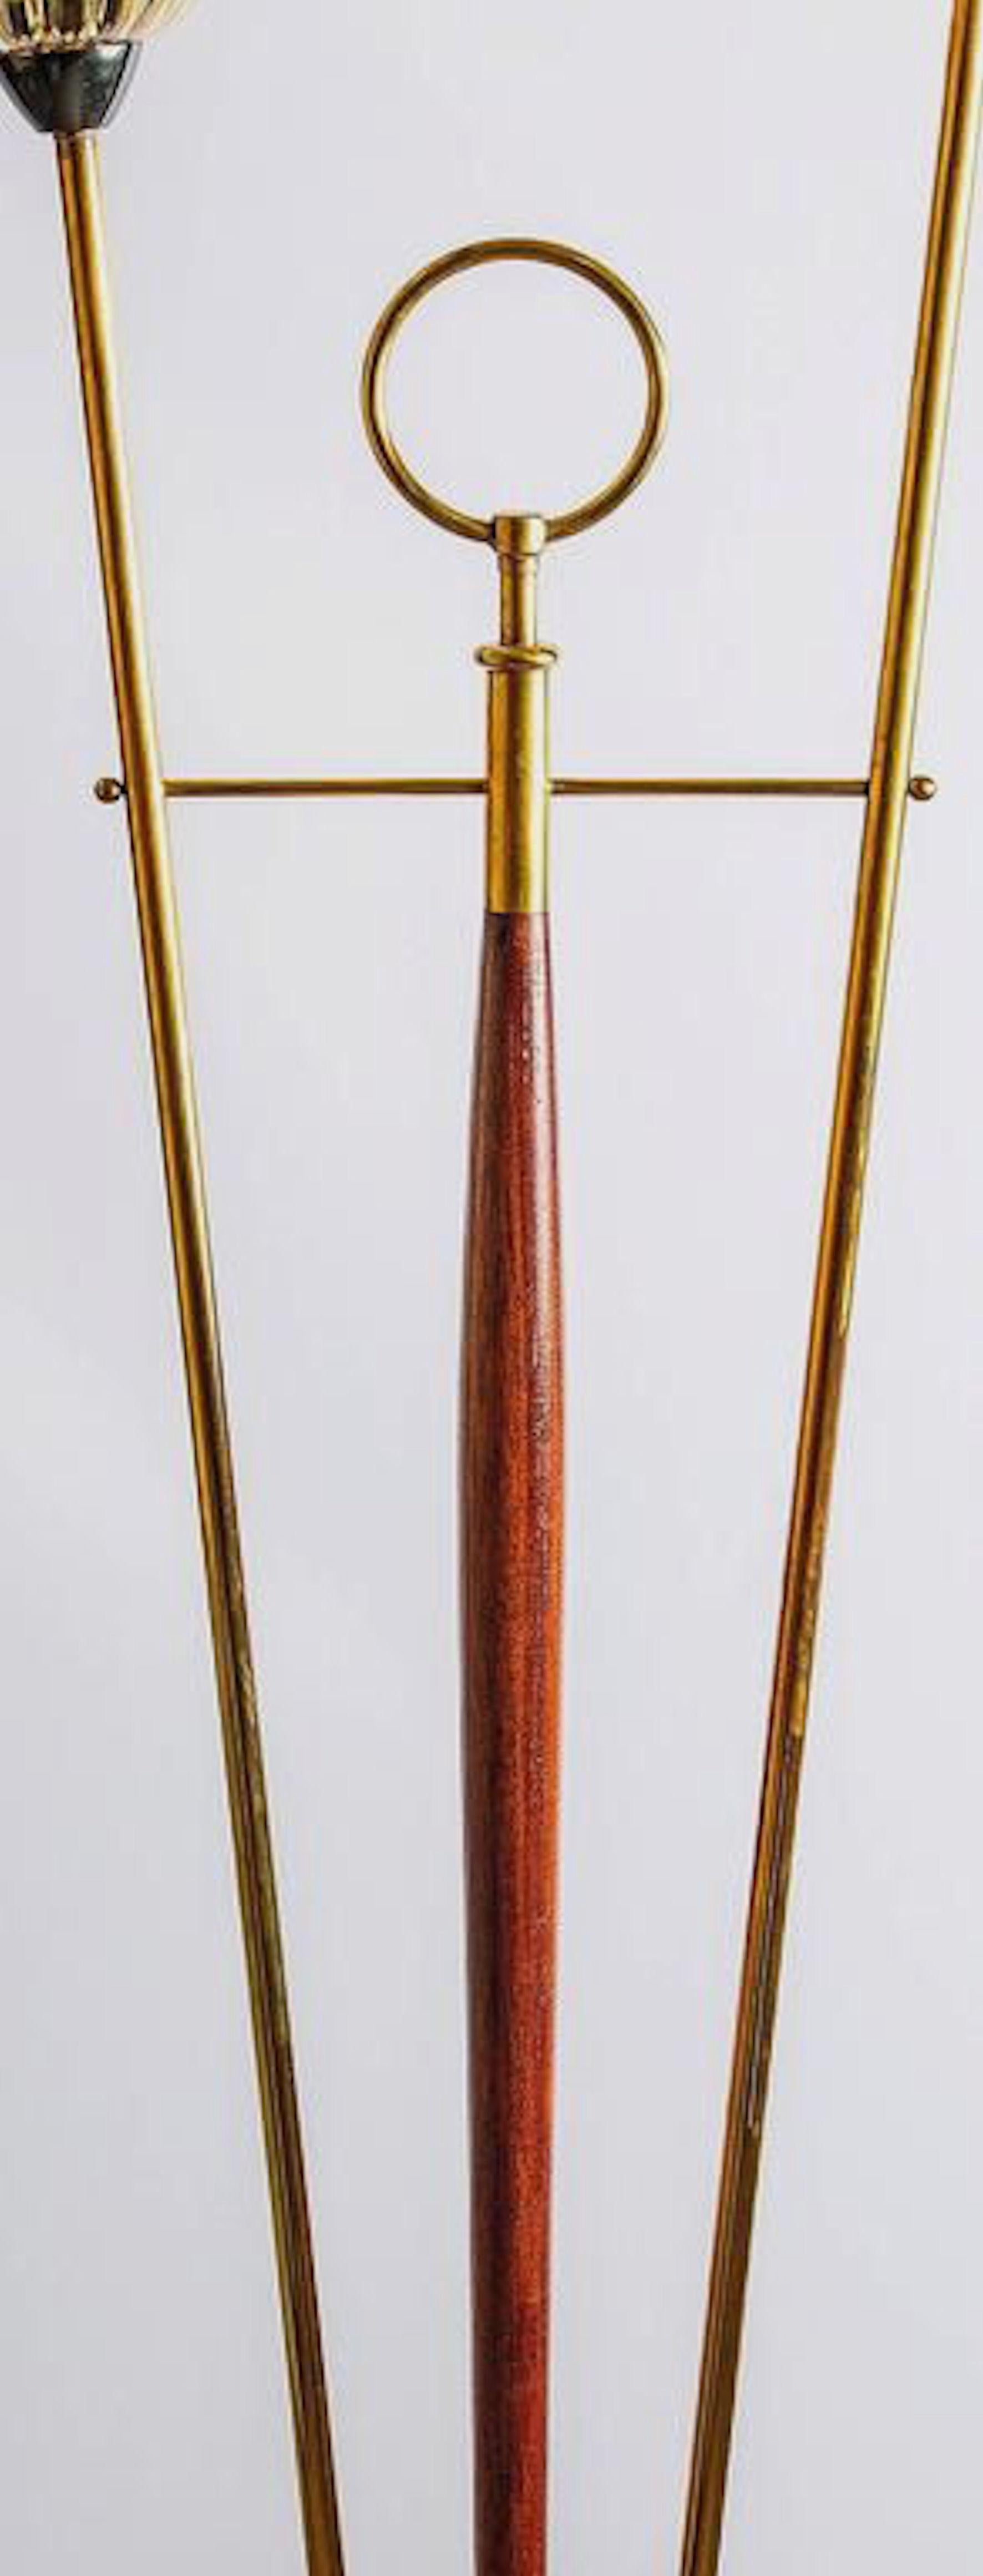 Mid-20th Century Mid-Century Modern Italian Floor Lamp in Wood, Brass and Murano Glass Shades